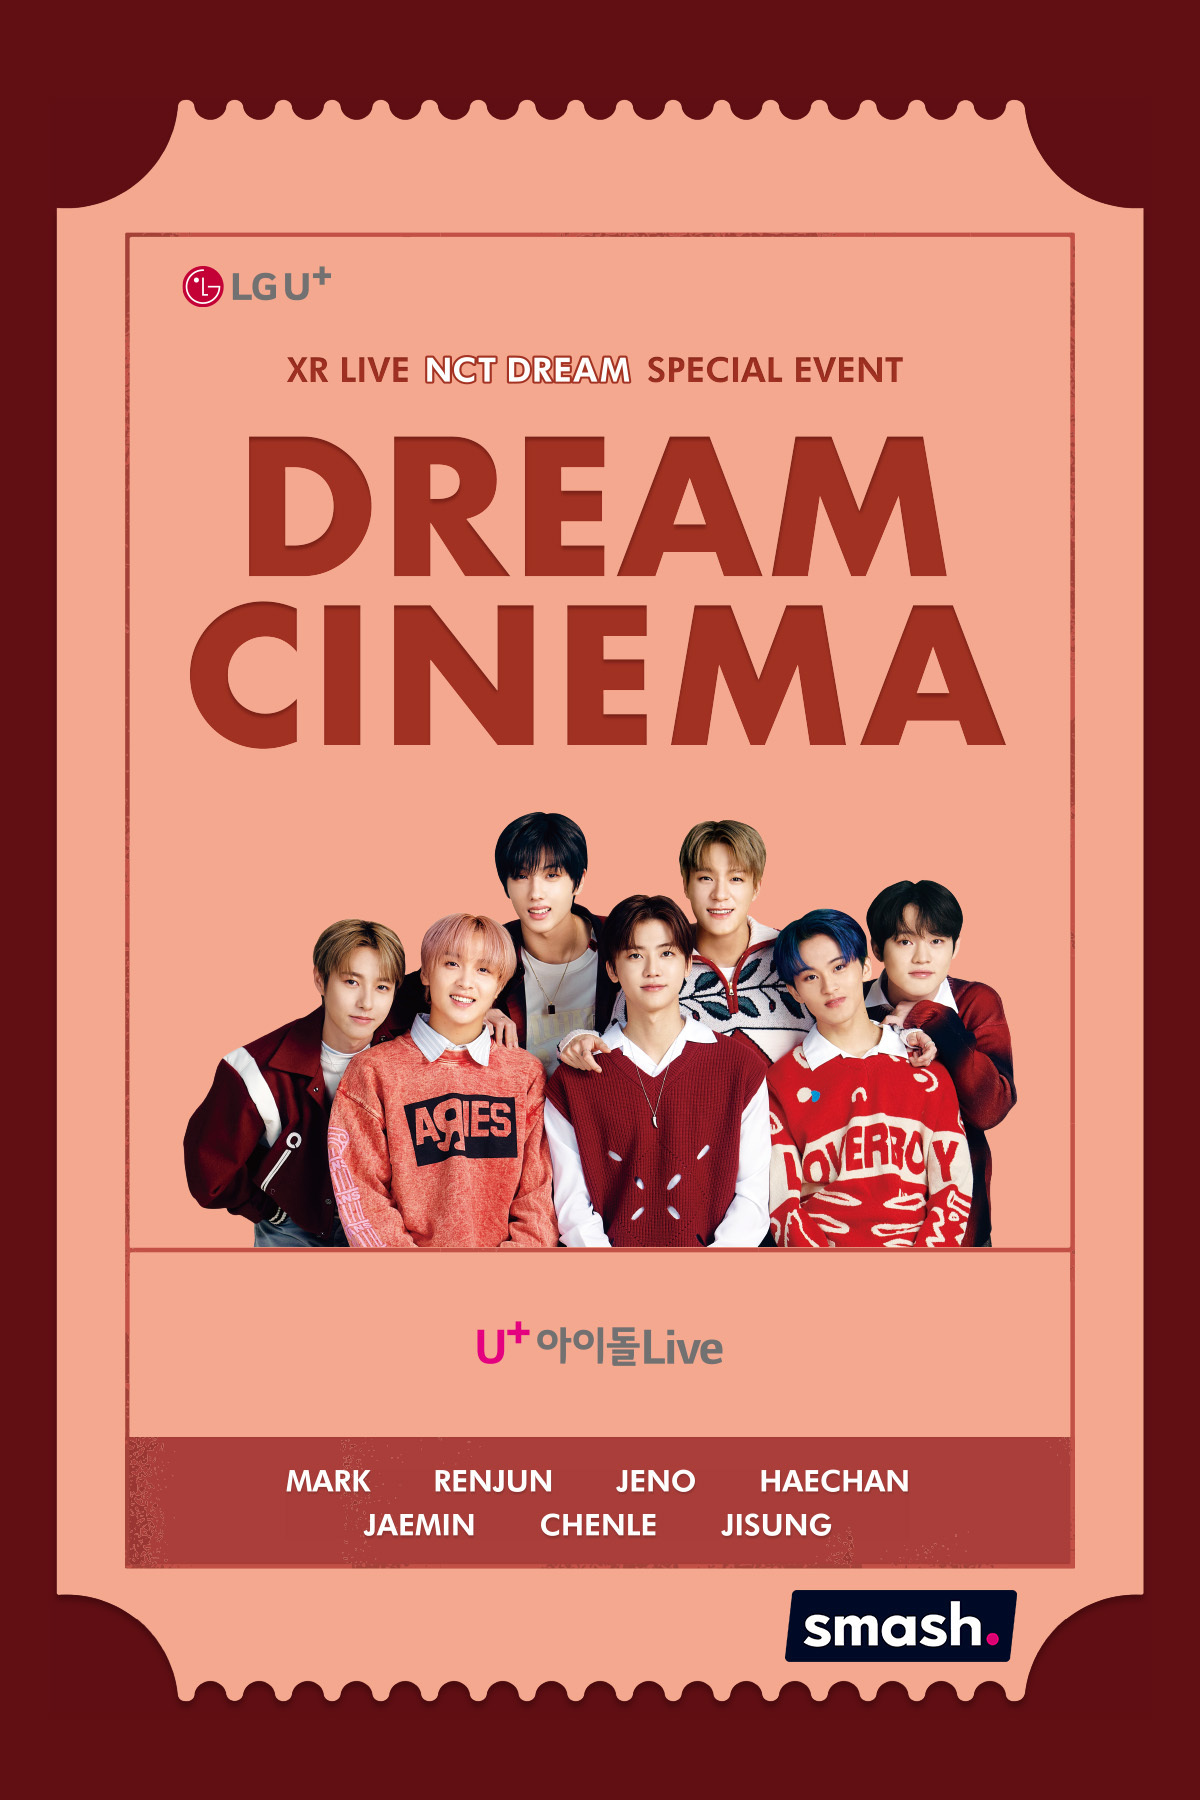 XR LIVE NCT DREAM SPECIAL EVENT : DREAM CINEMA